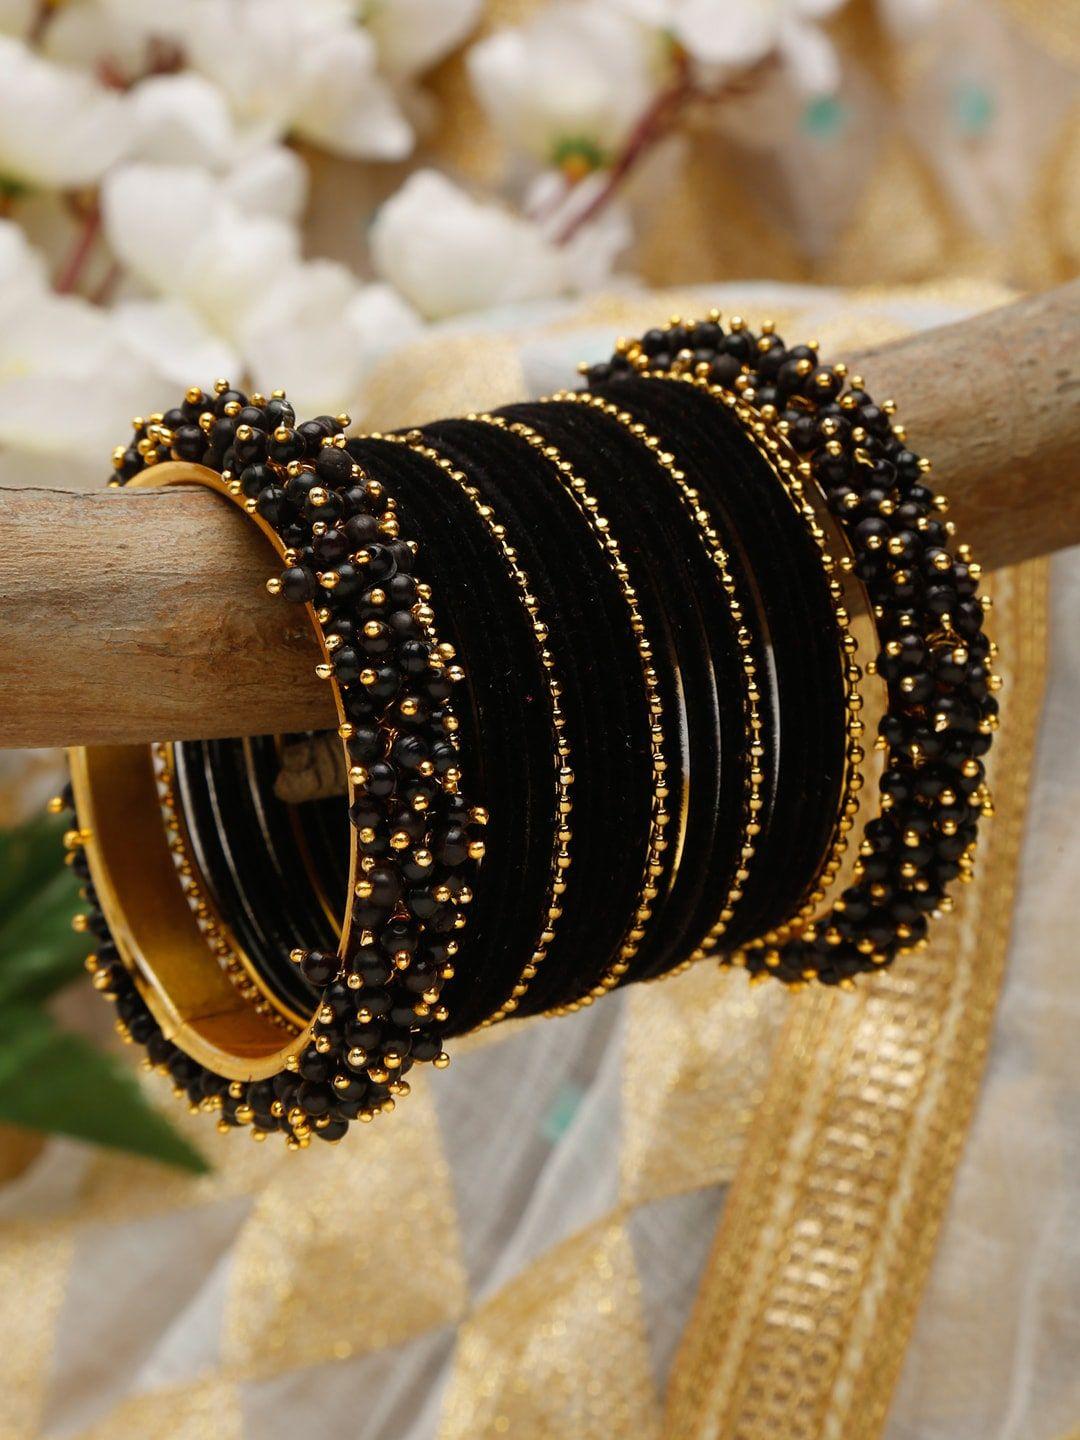 shining diva set of 23 gold-plated black beaded bangles